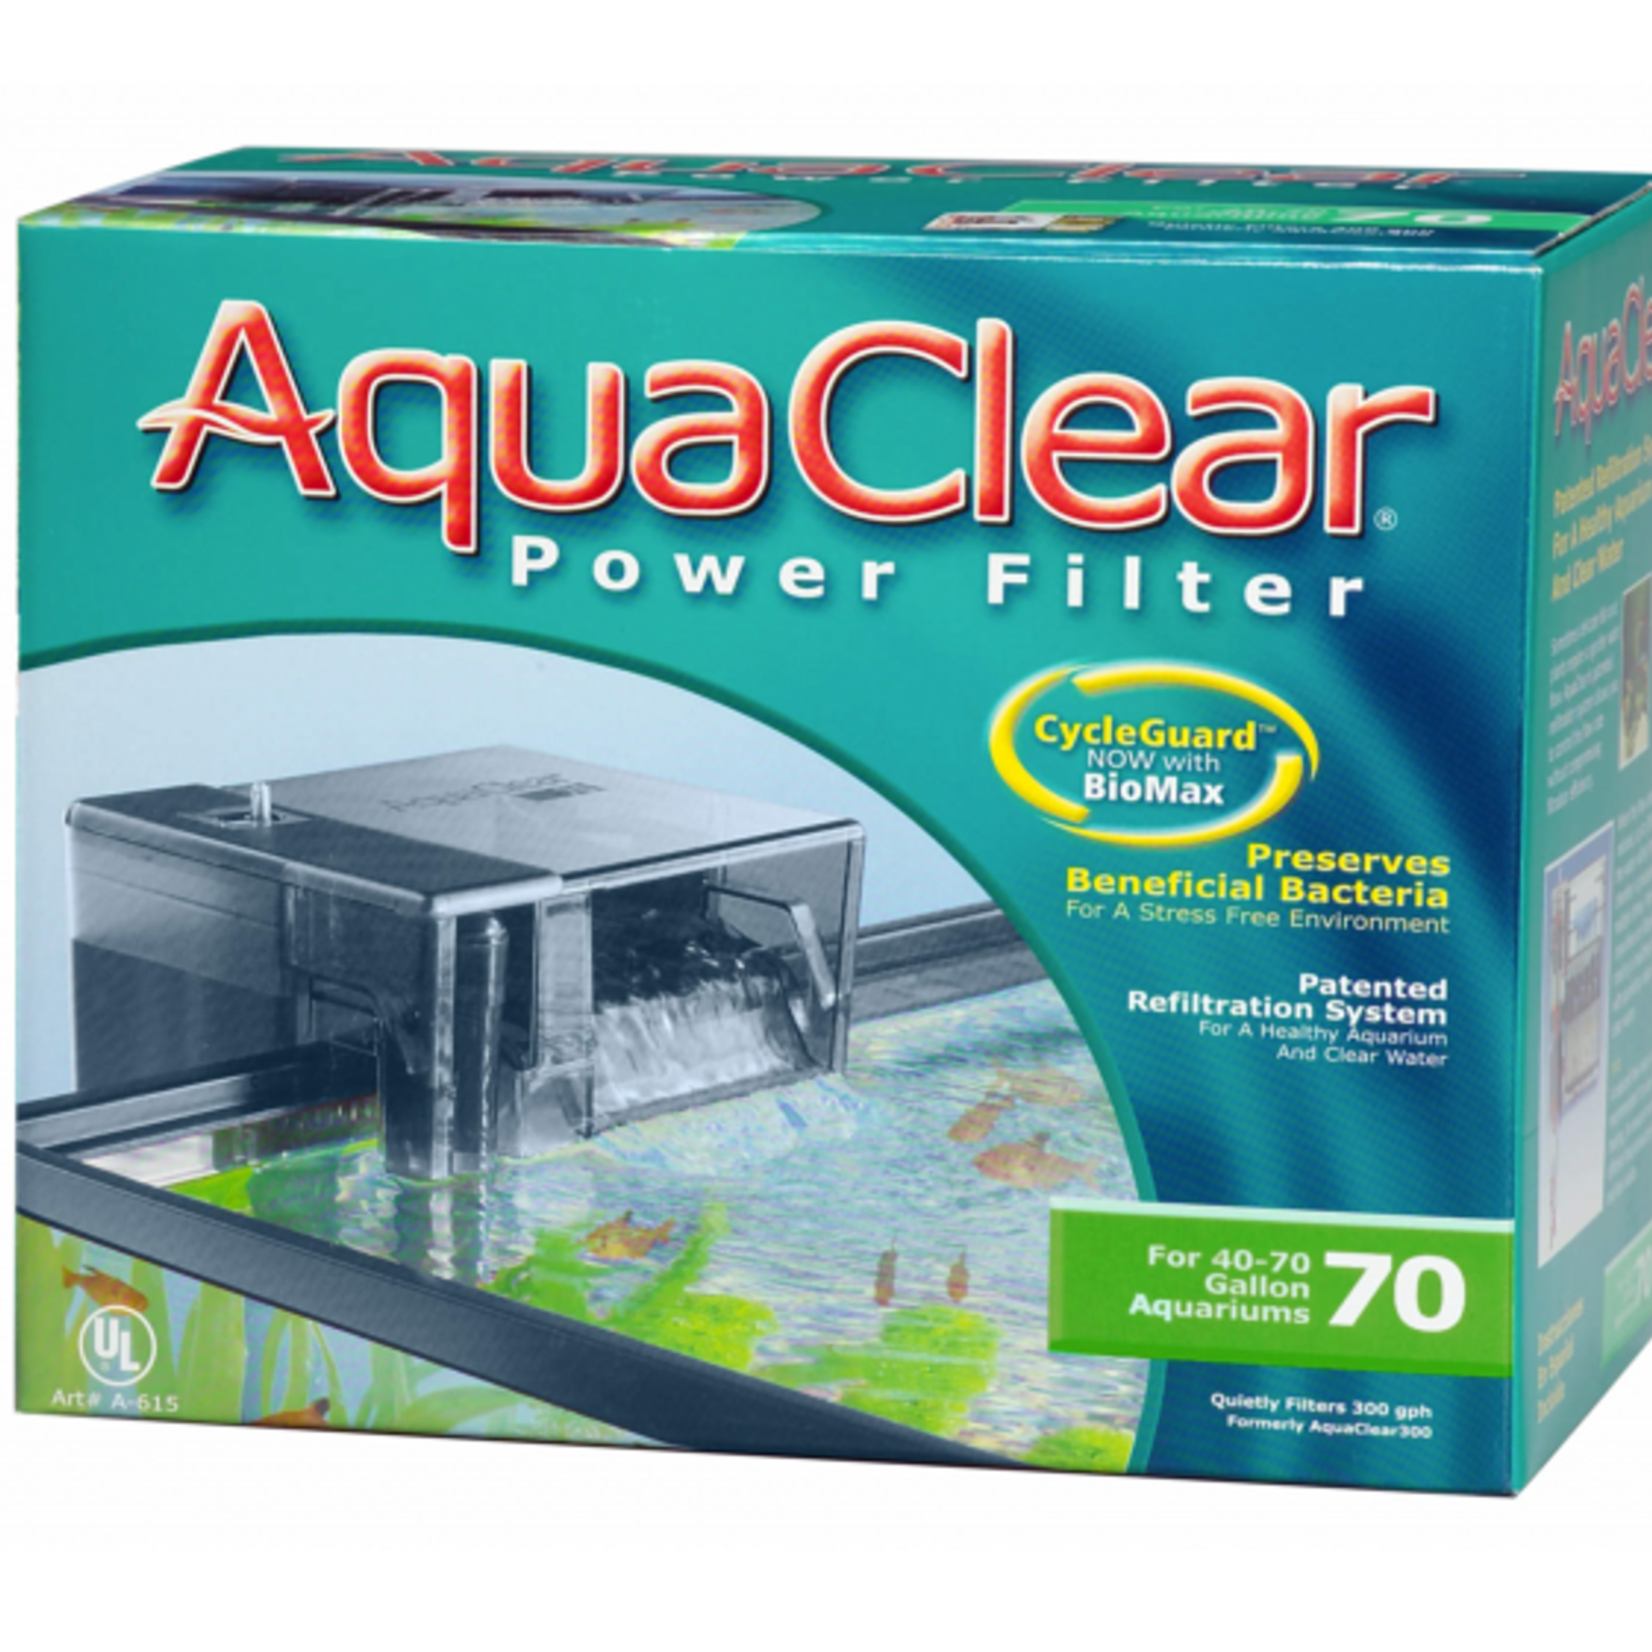 AquaClear 70 Power Filter, cETLus Listed (Inc. A617, A618 & A1373)